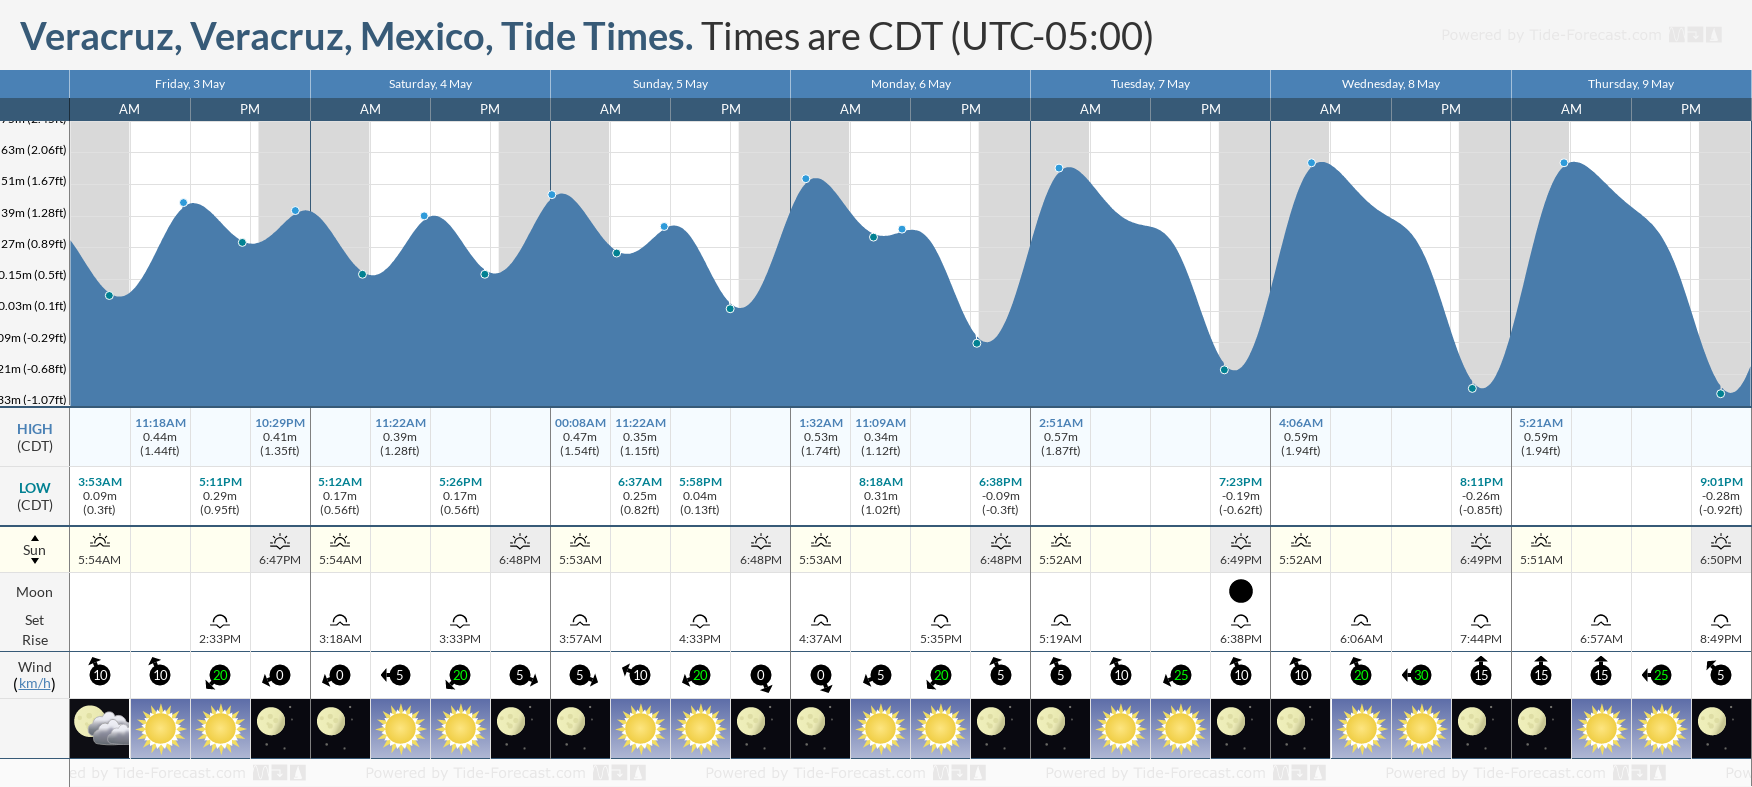 Veracruz, Veracruz, Mexico Tide Chart including high and low tide times for the next 7 days